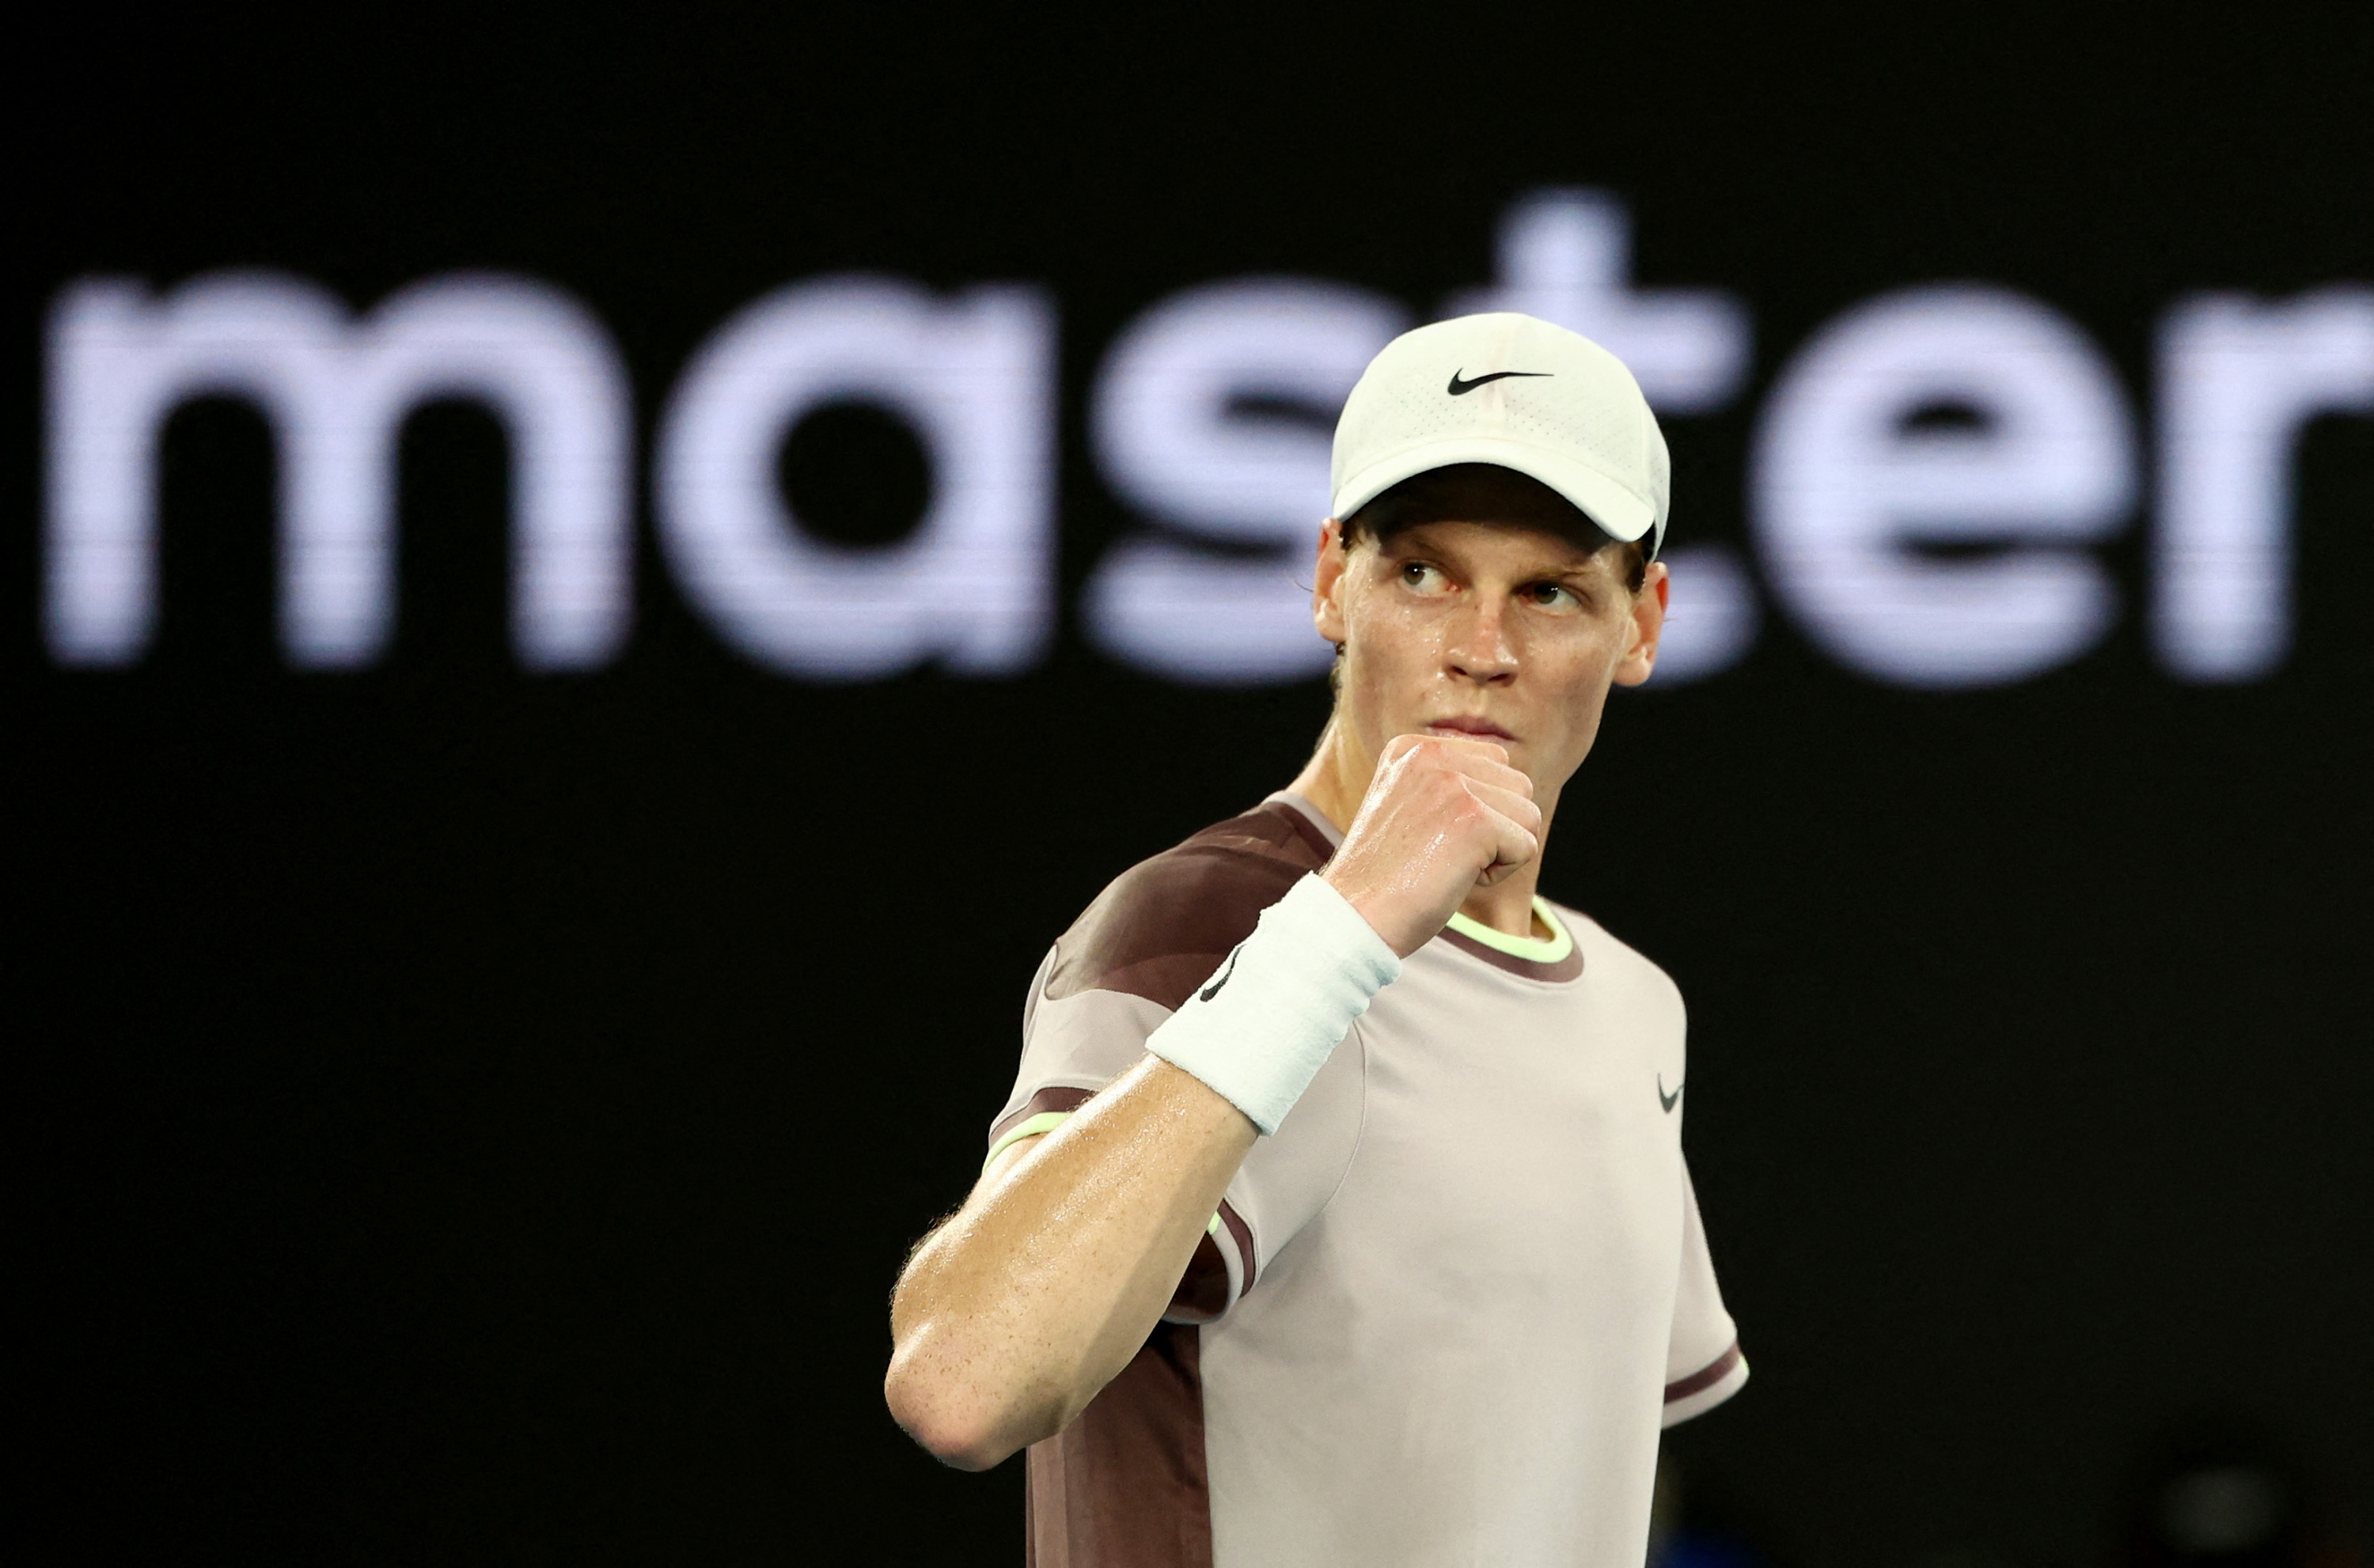 Australian Open: Sinner overthrows Medvedev to claim first Grand Slam title